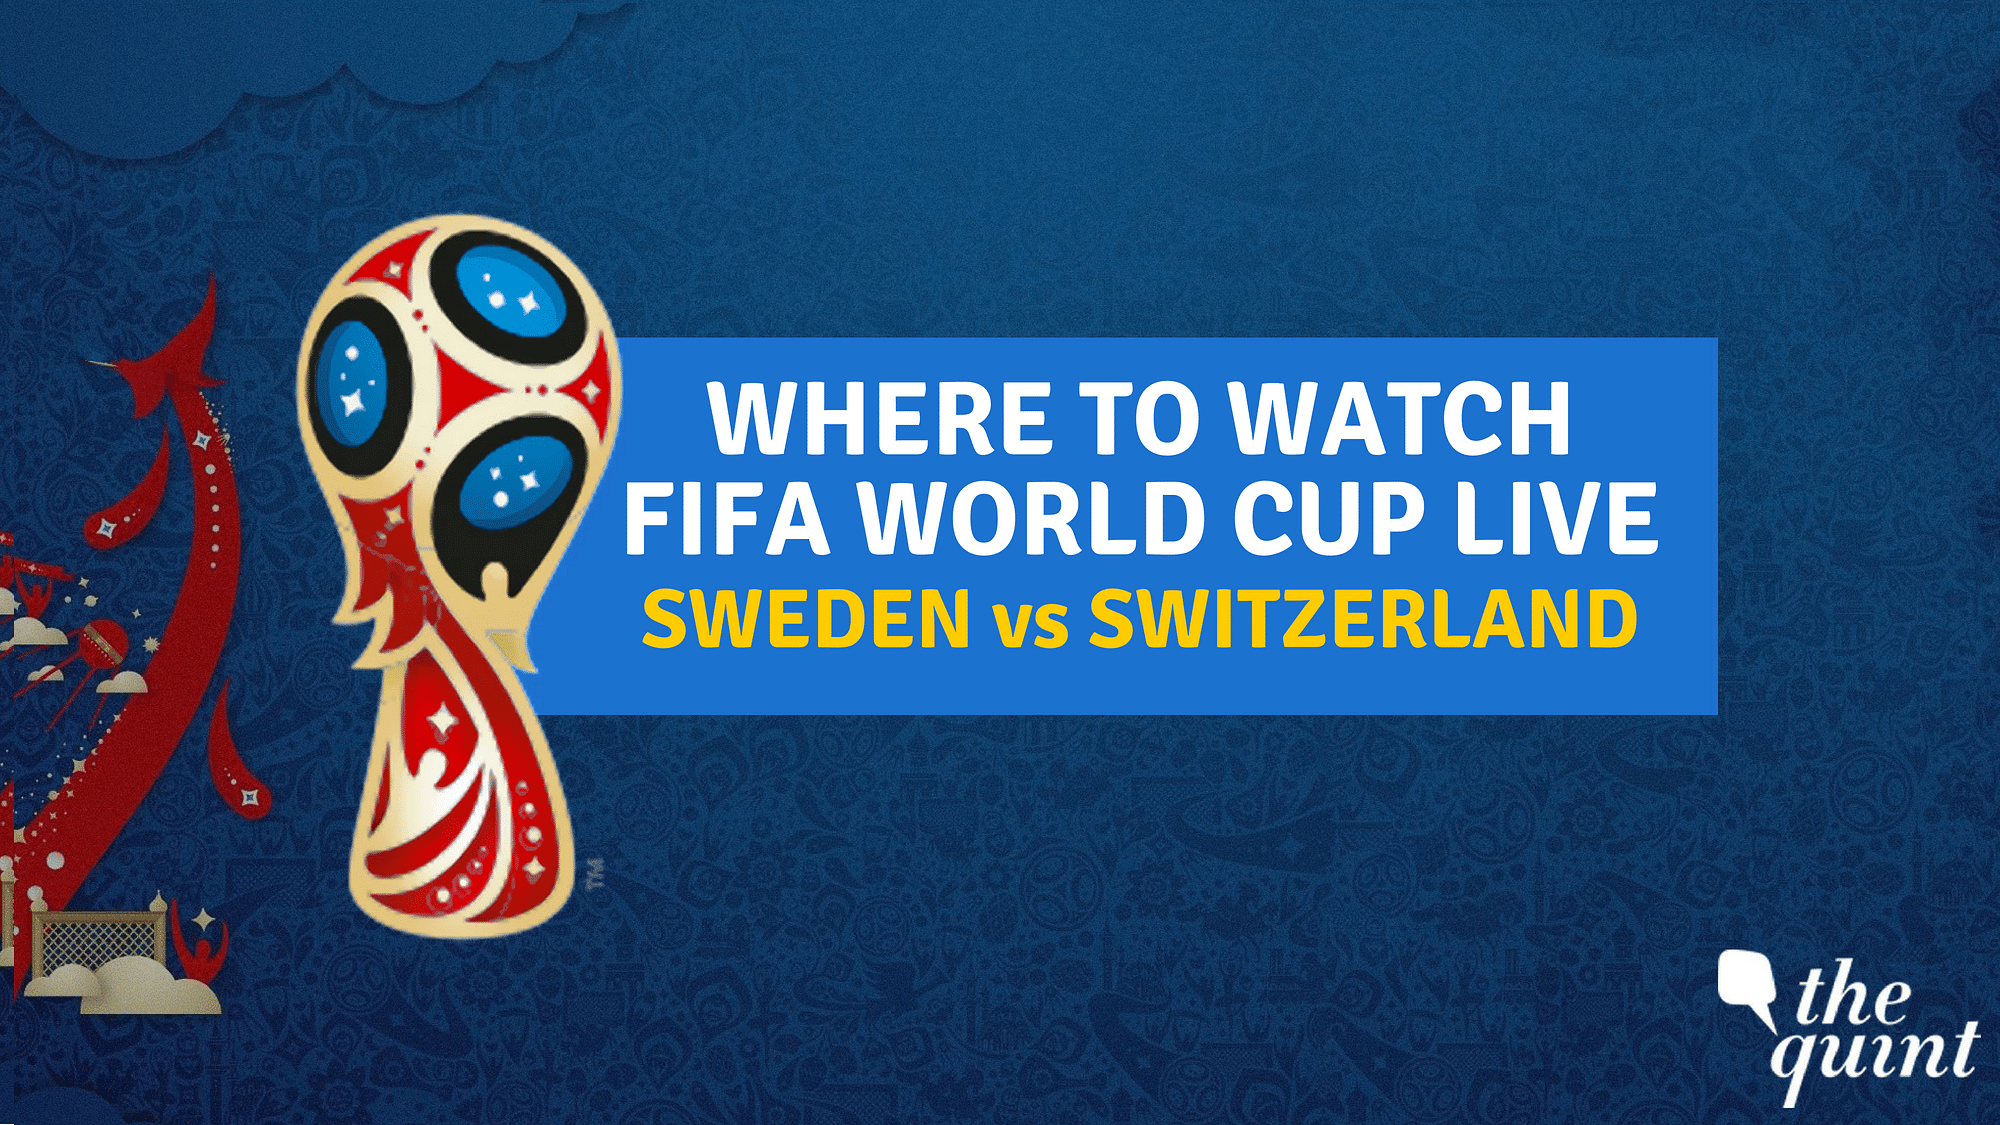 Sweden vs Switzerland starts at 7.30 pm  on 3 July.